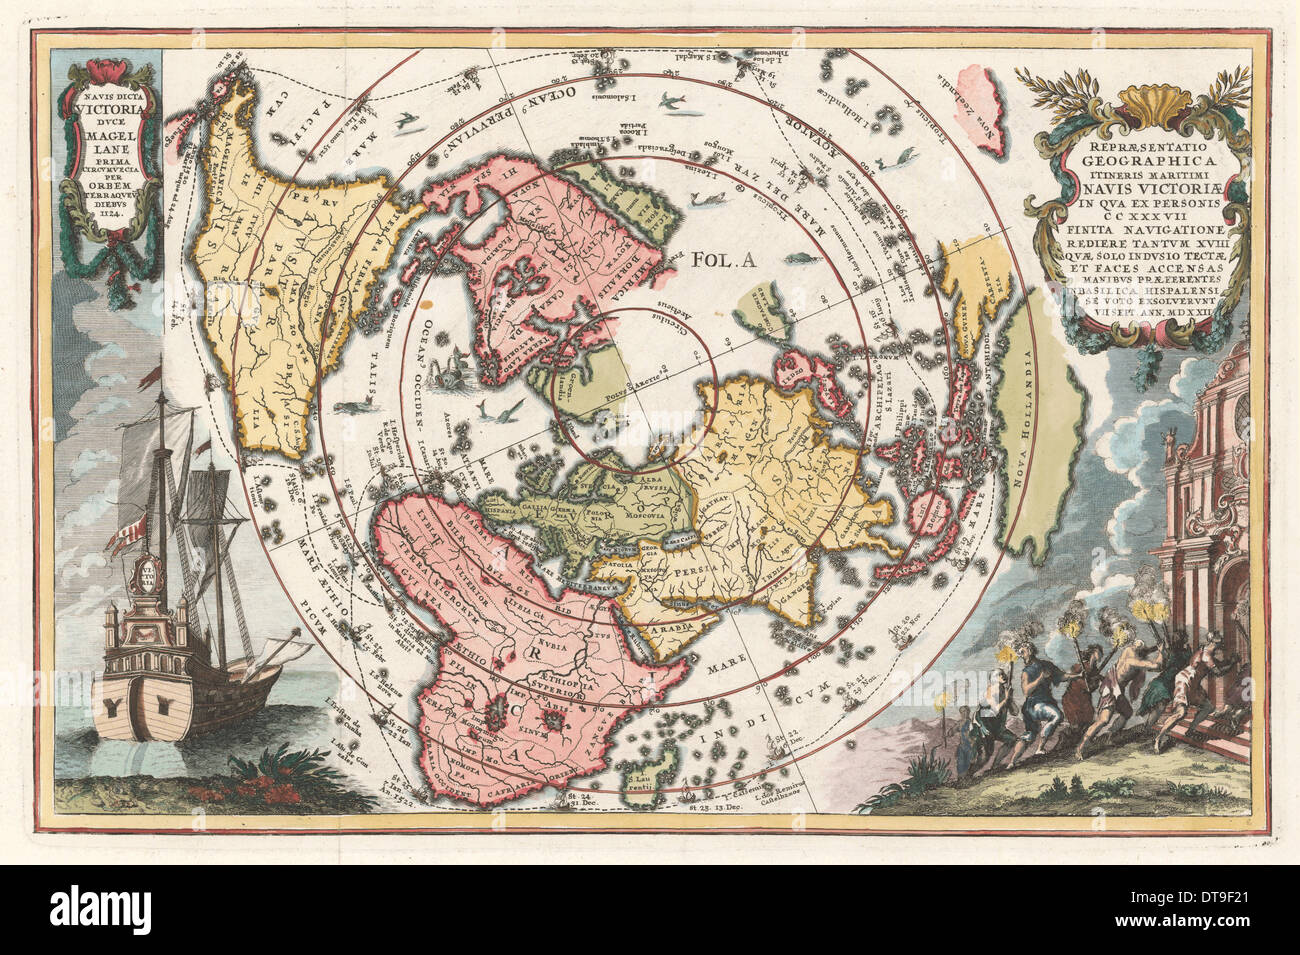 https://c8.alamy.com/comp/DT9F21/world-map-with-magellans-circumnavigation-from-scherers-atlas-novus-DT9F21.jpg